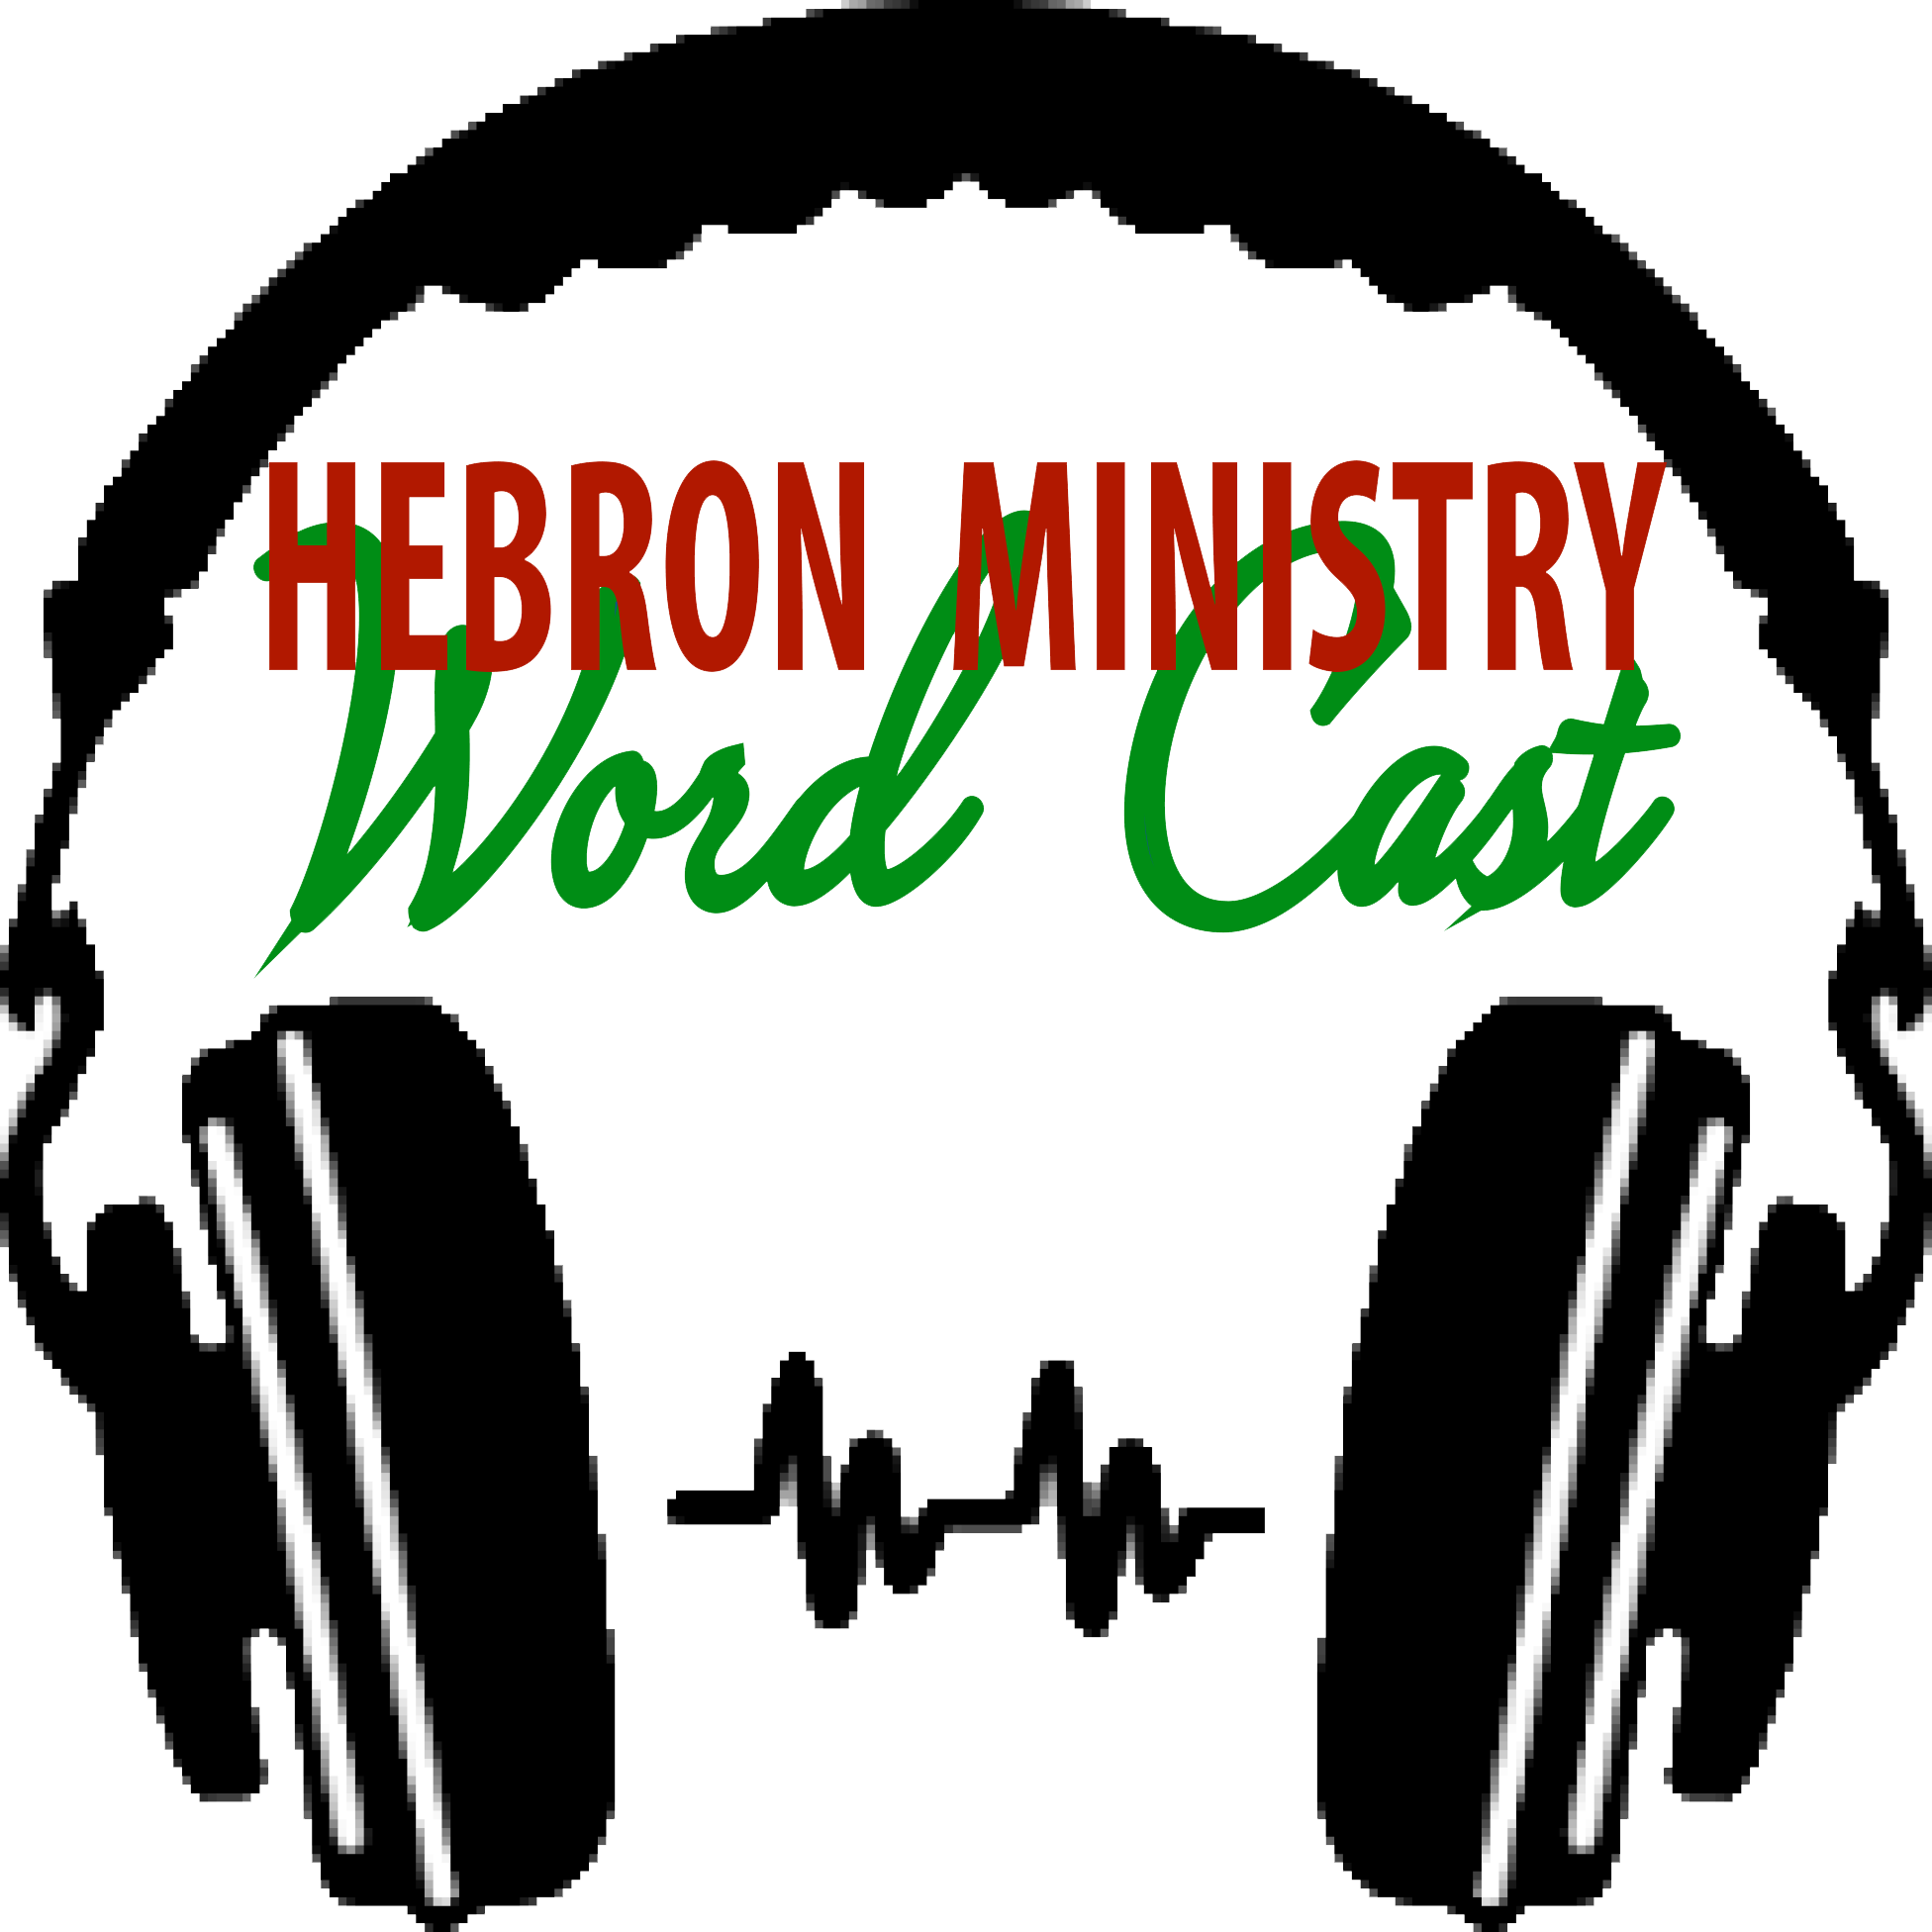 Hebron Ministry Word Cast Logo